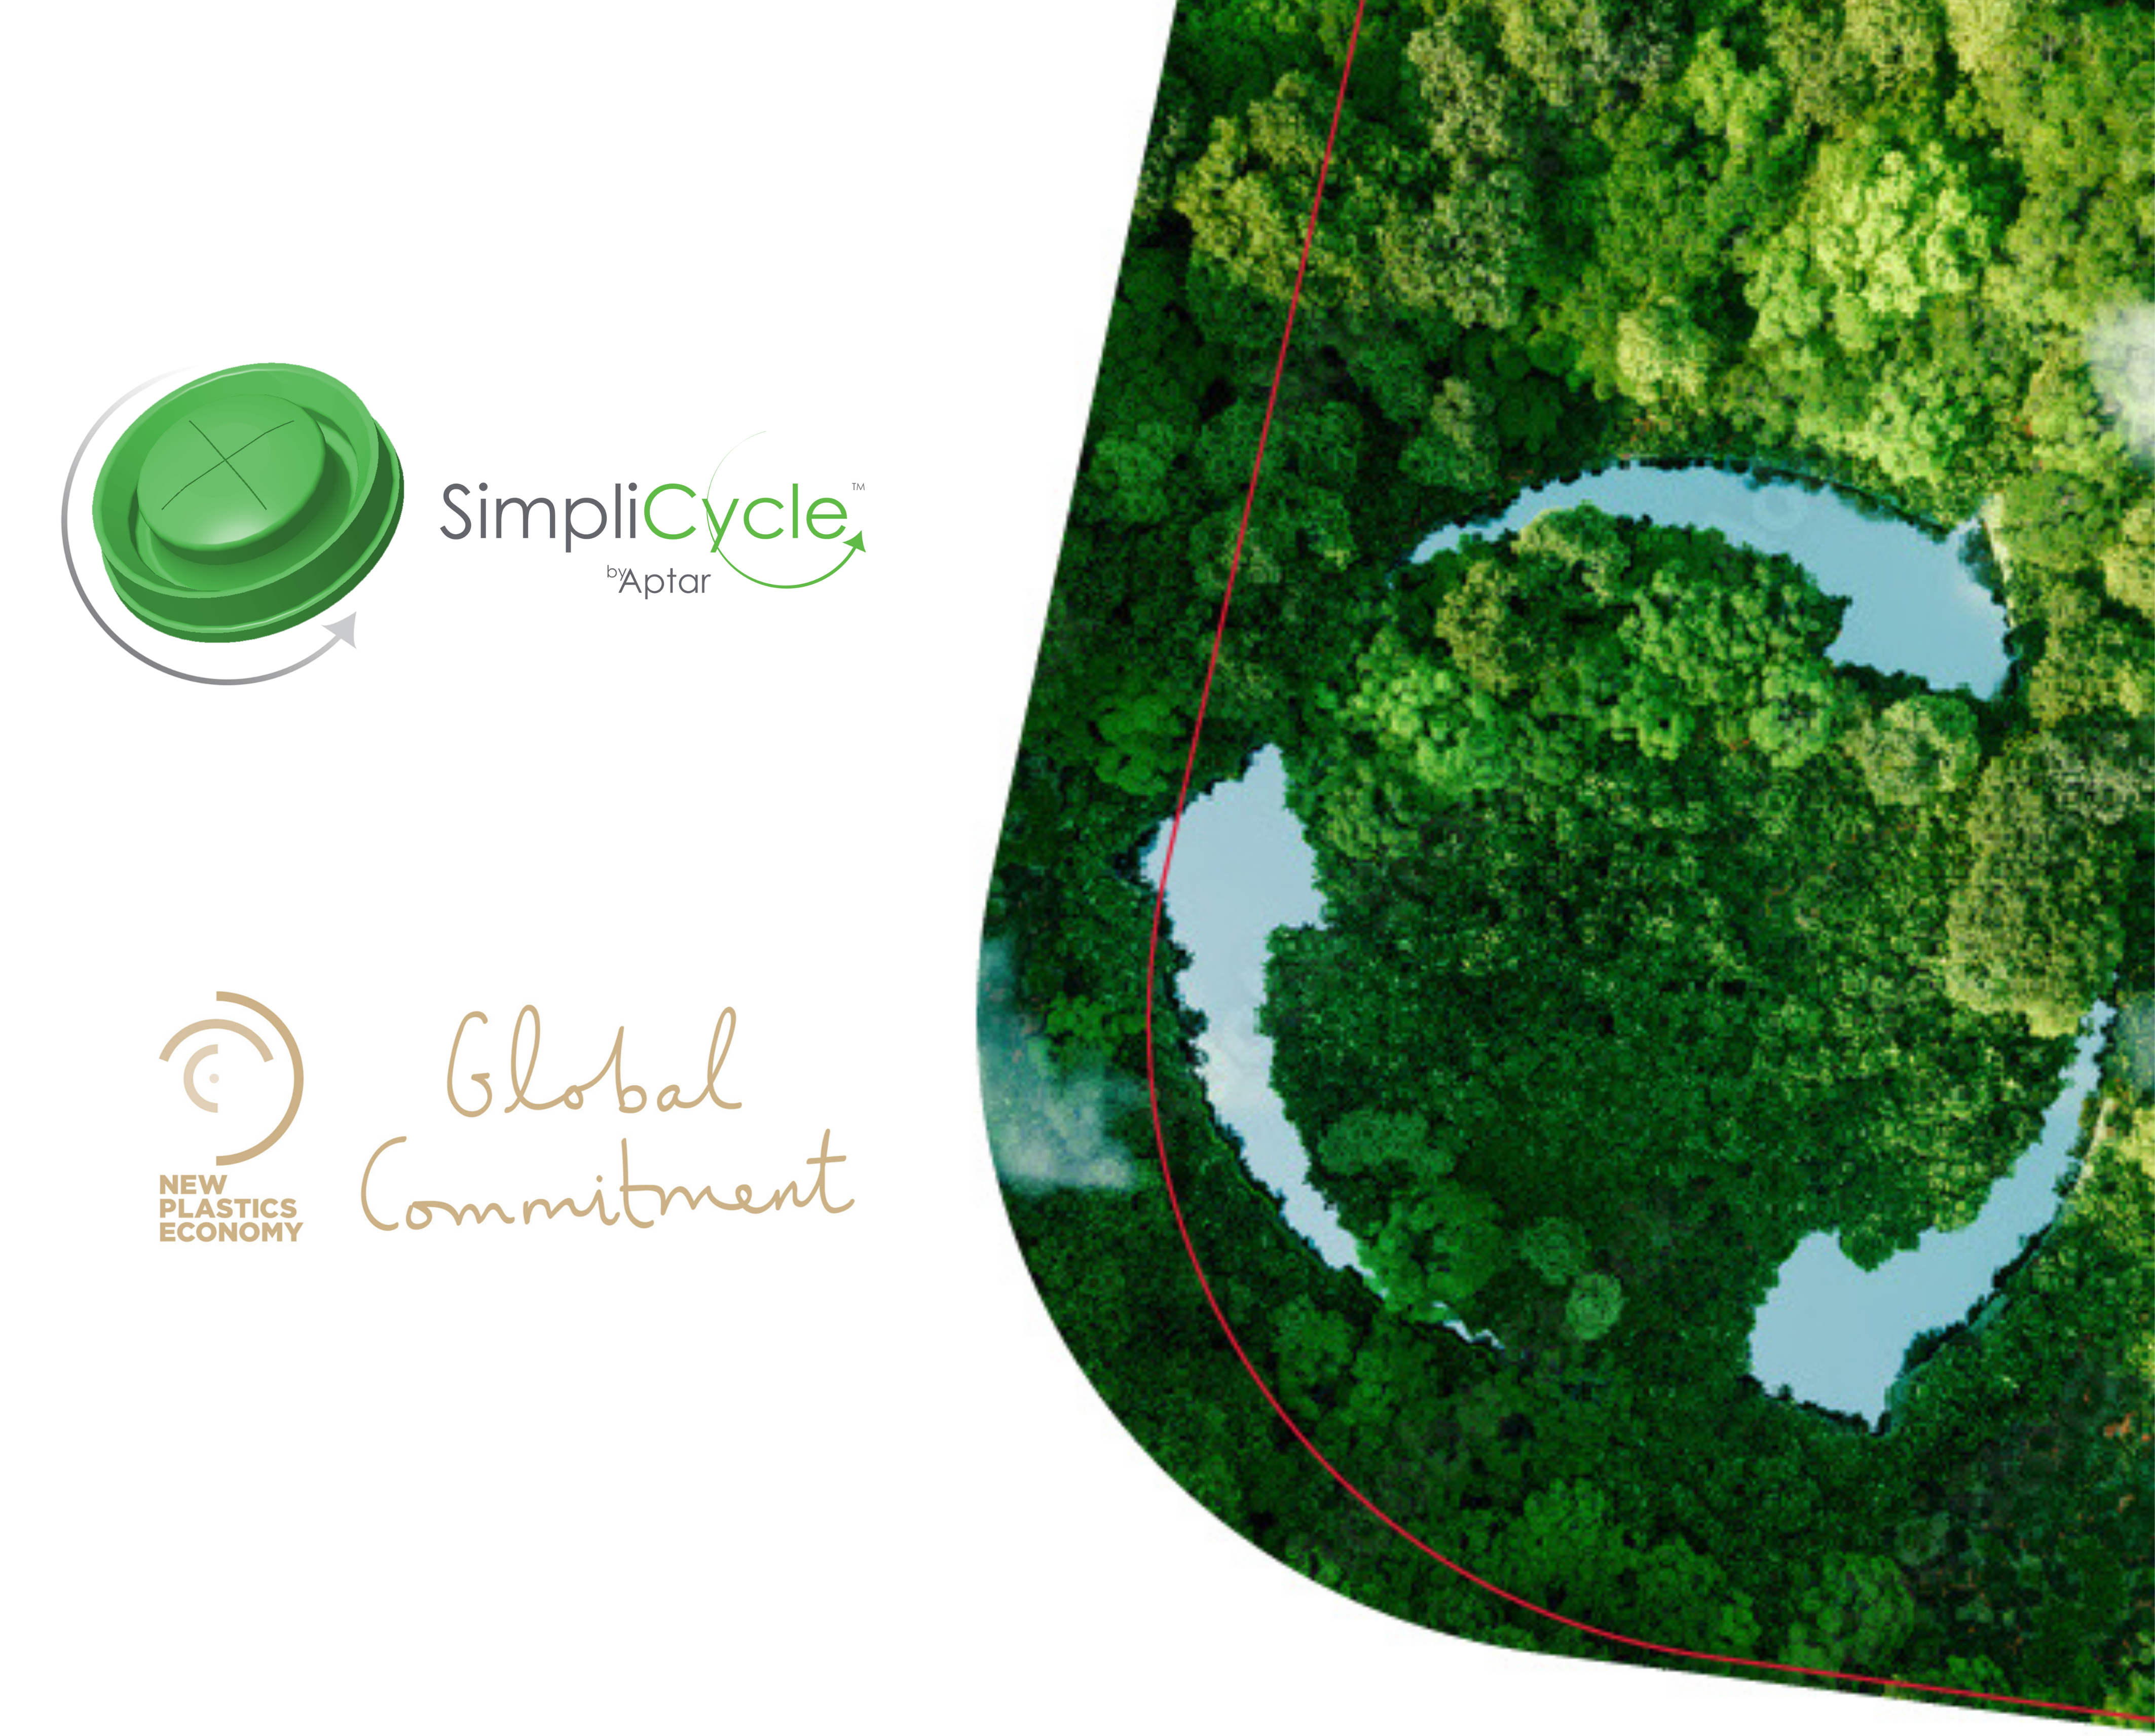 SimpliCycle flow control valve logo and New Plastics Economy Global Commitment logo